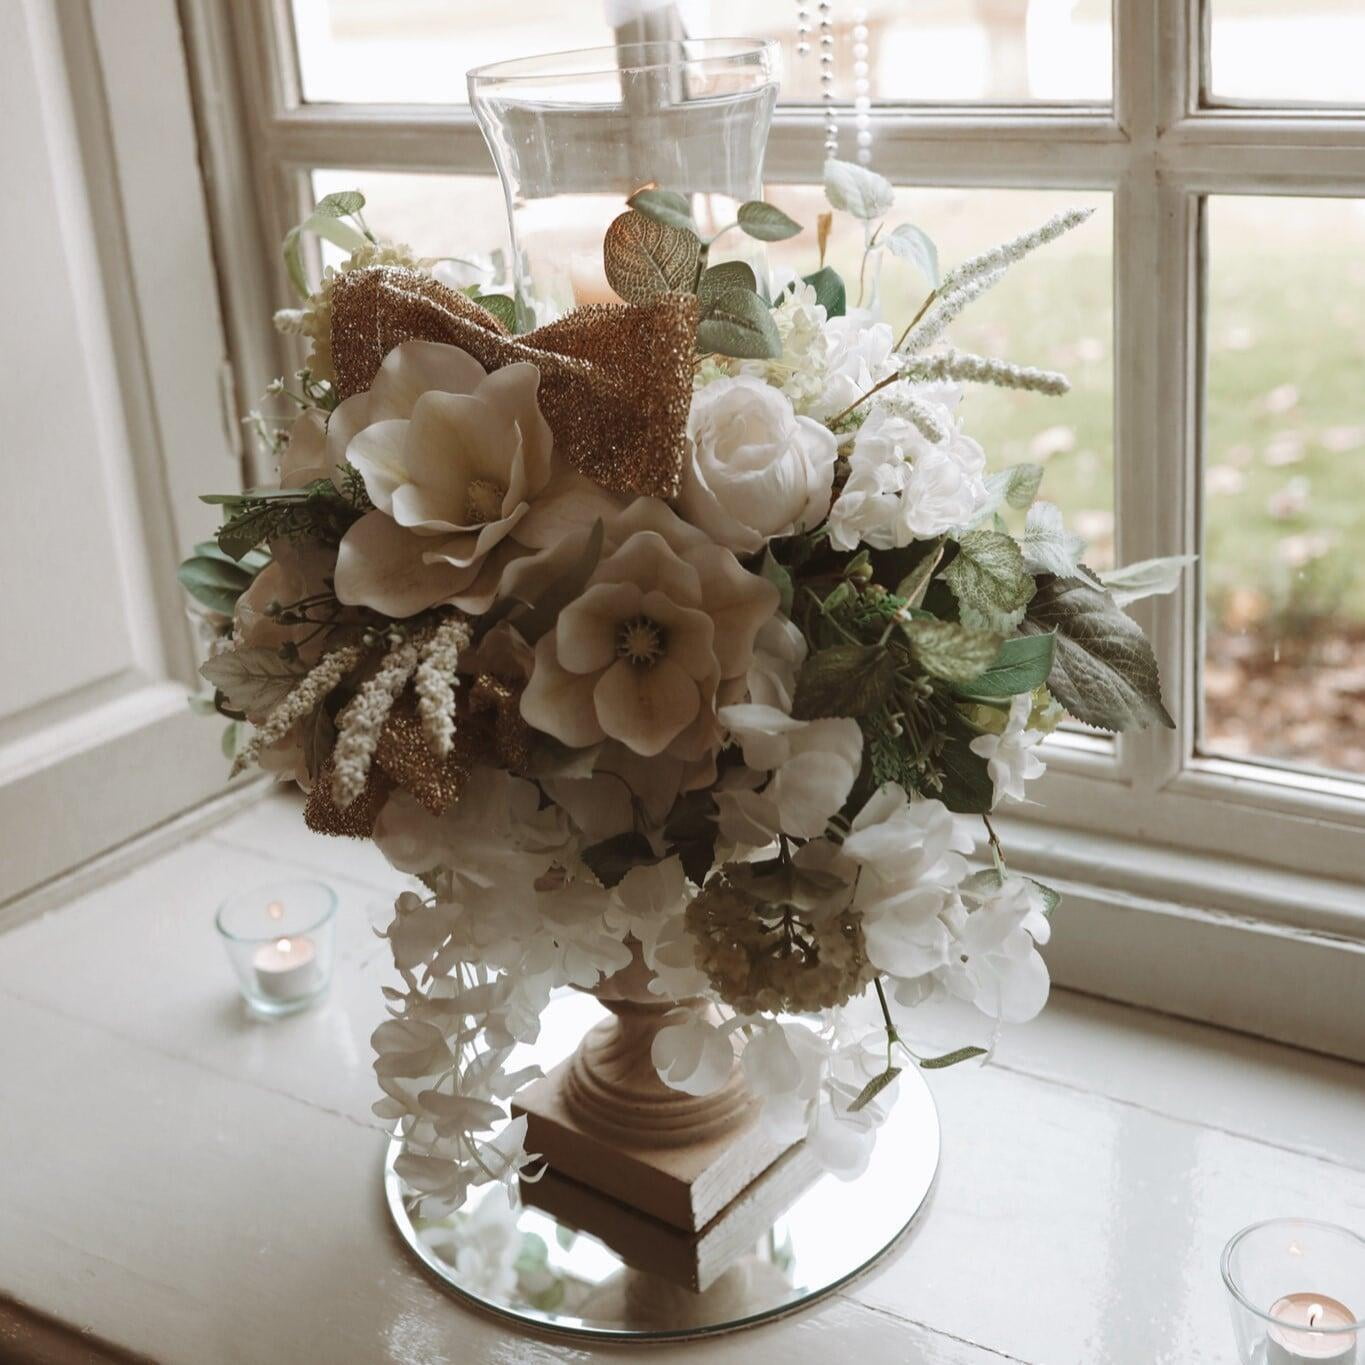 Flowers in window at wedding